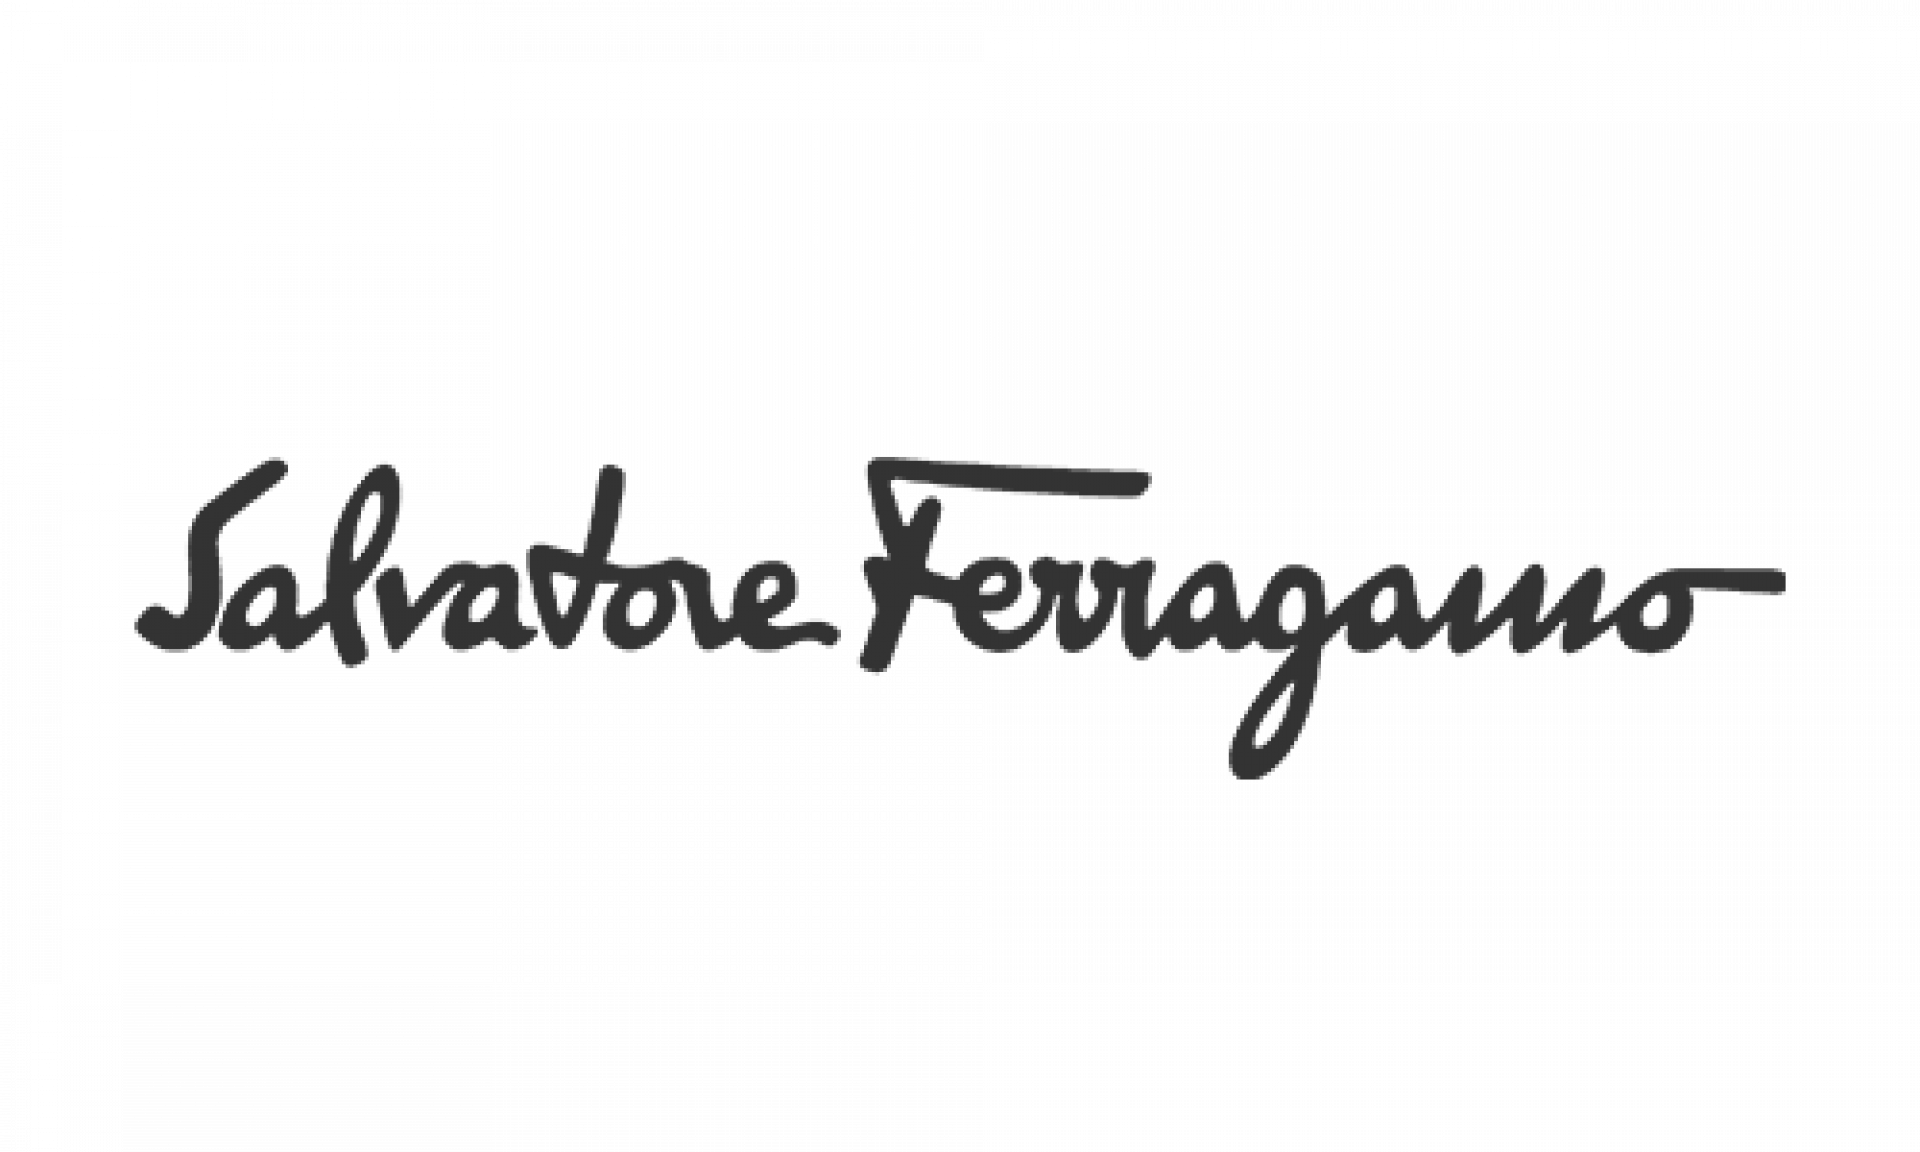 Salvatore-Ferragamo-logo.png